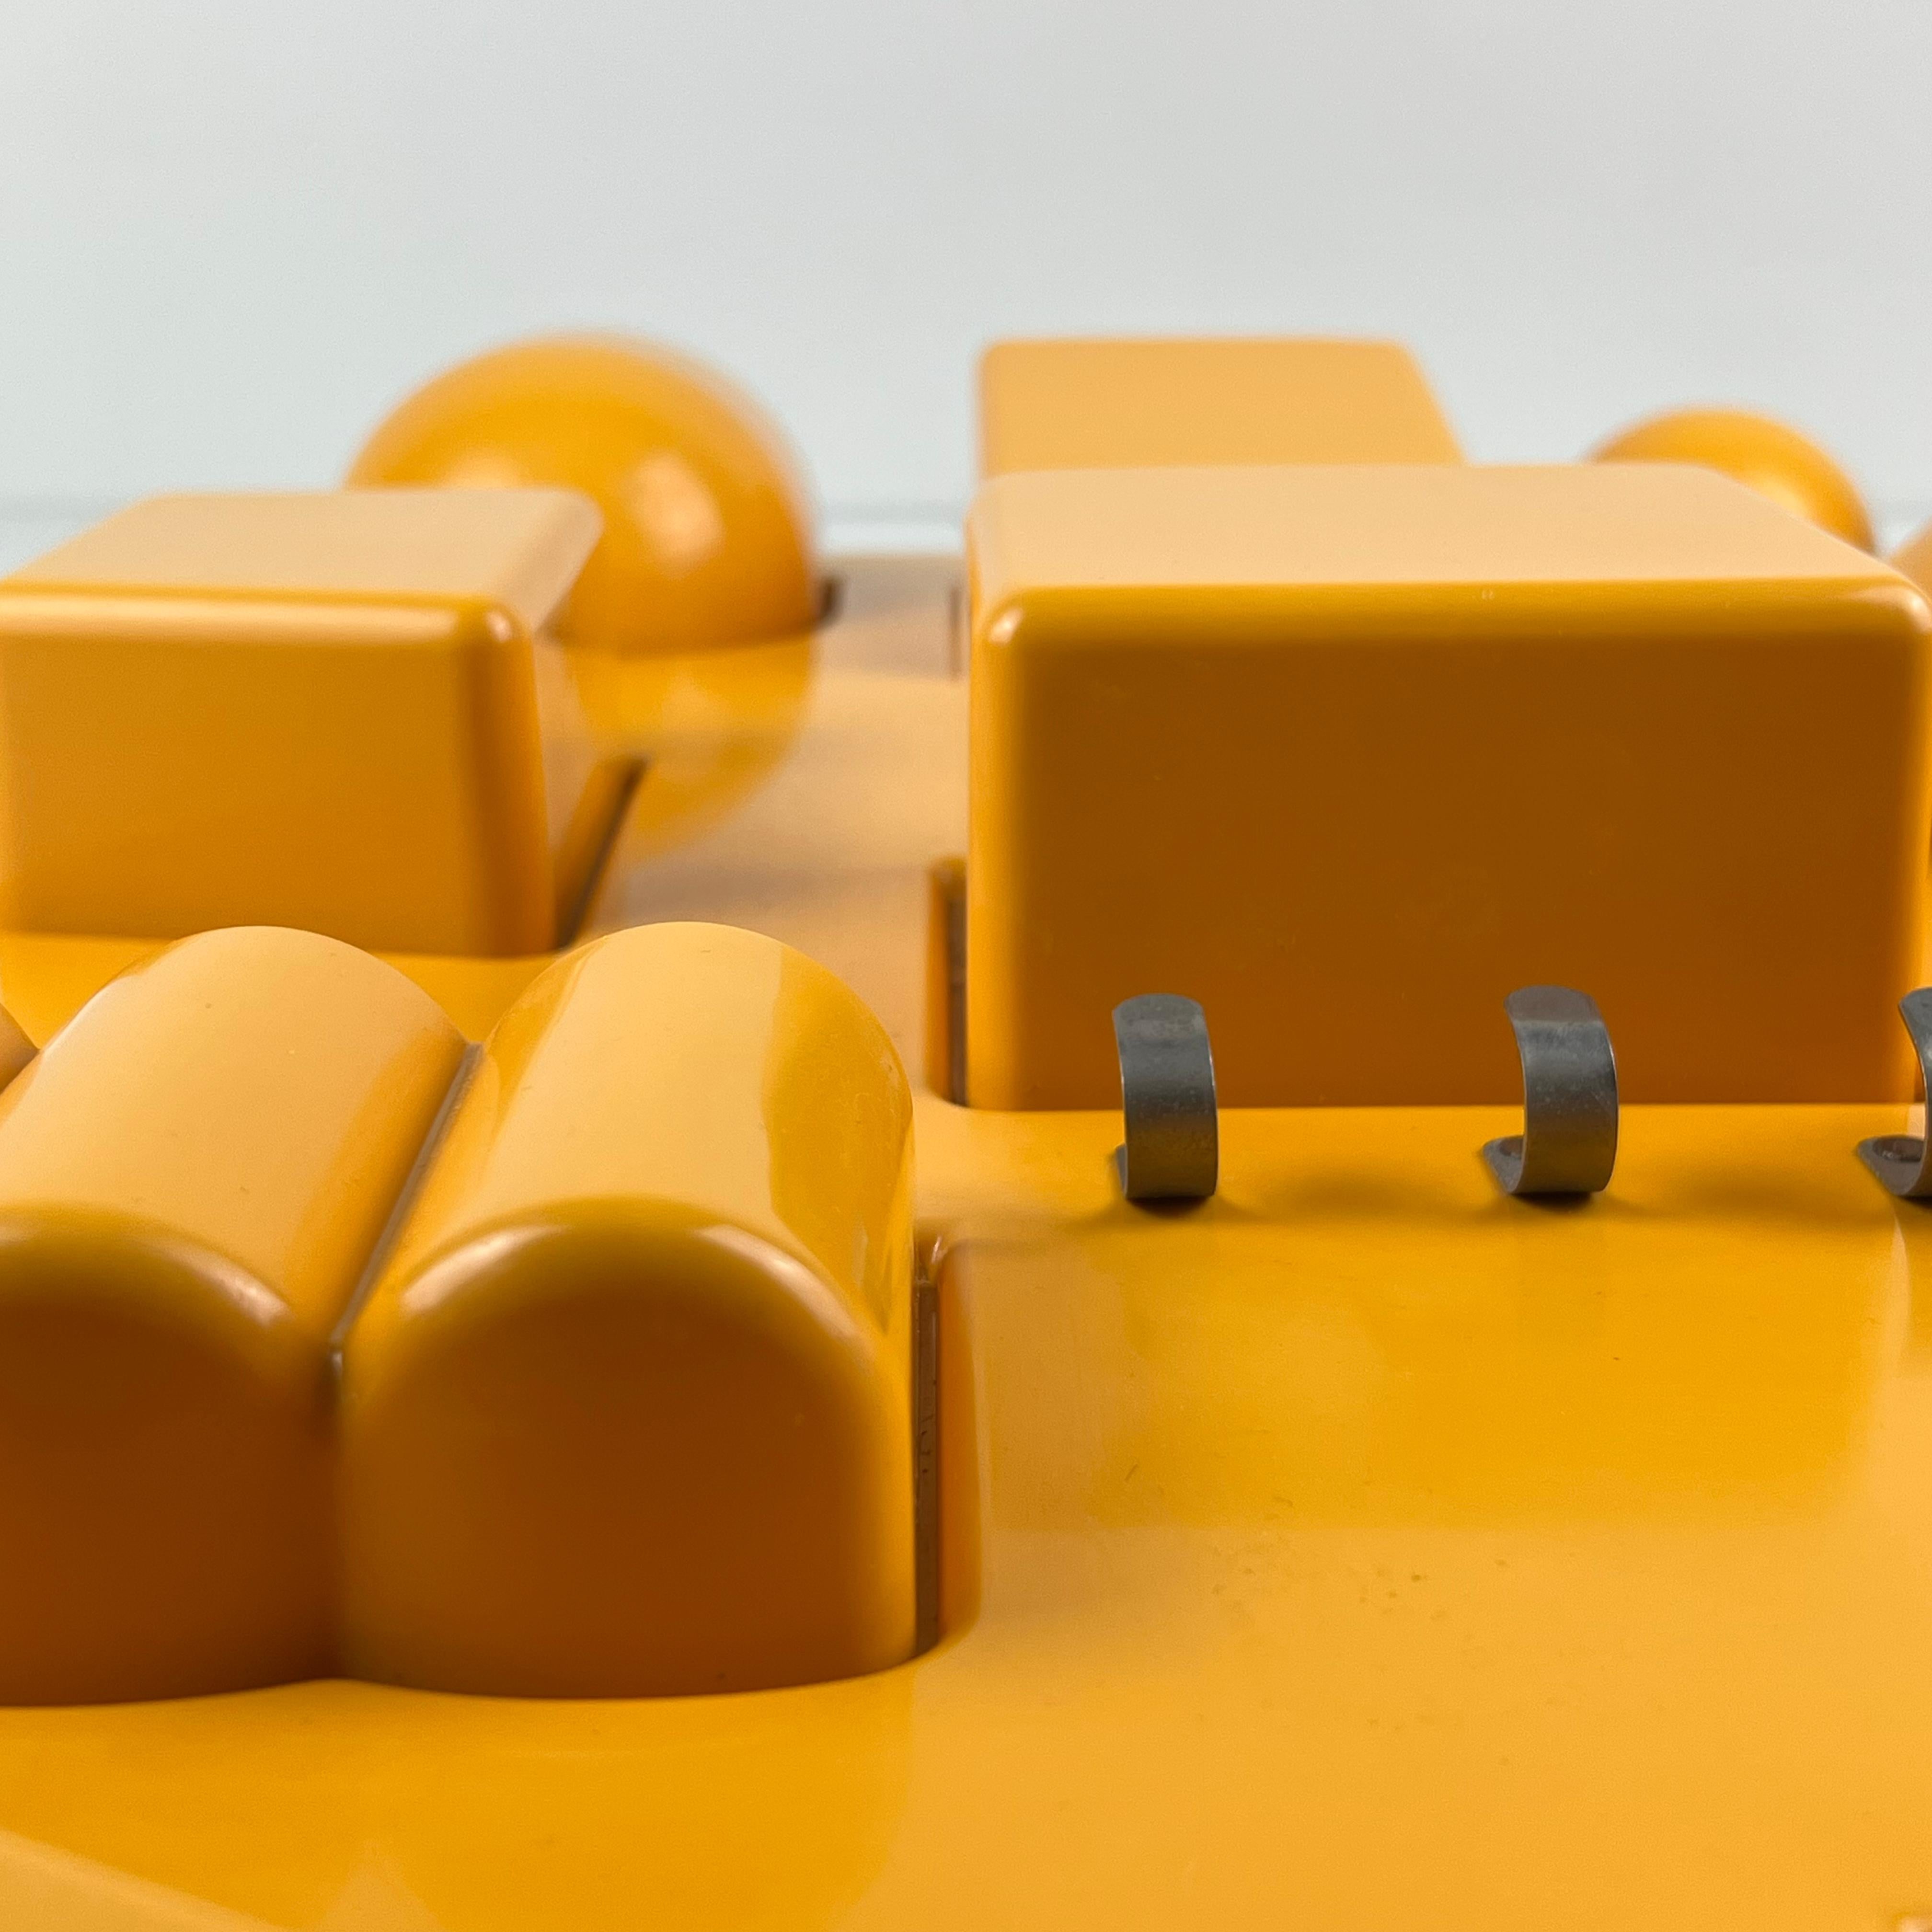 Yellow “Utensilo” Plastic Wall Storage Unit designed by Dorothee Maurer Becker  1